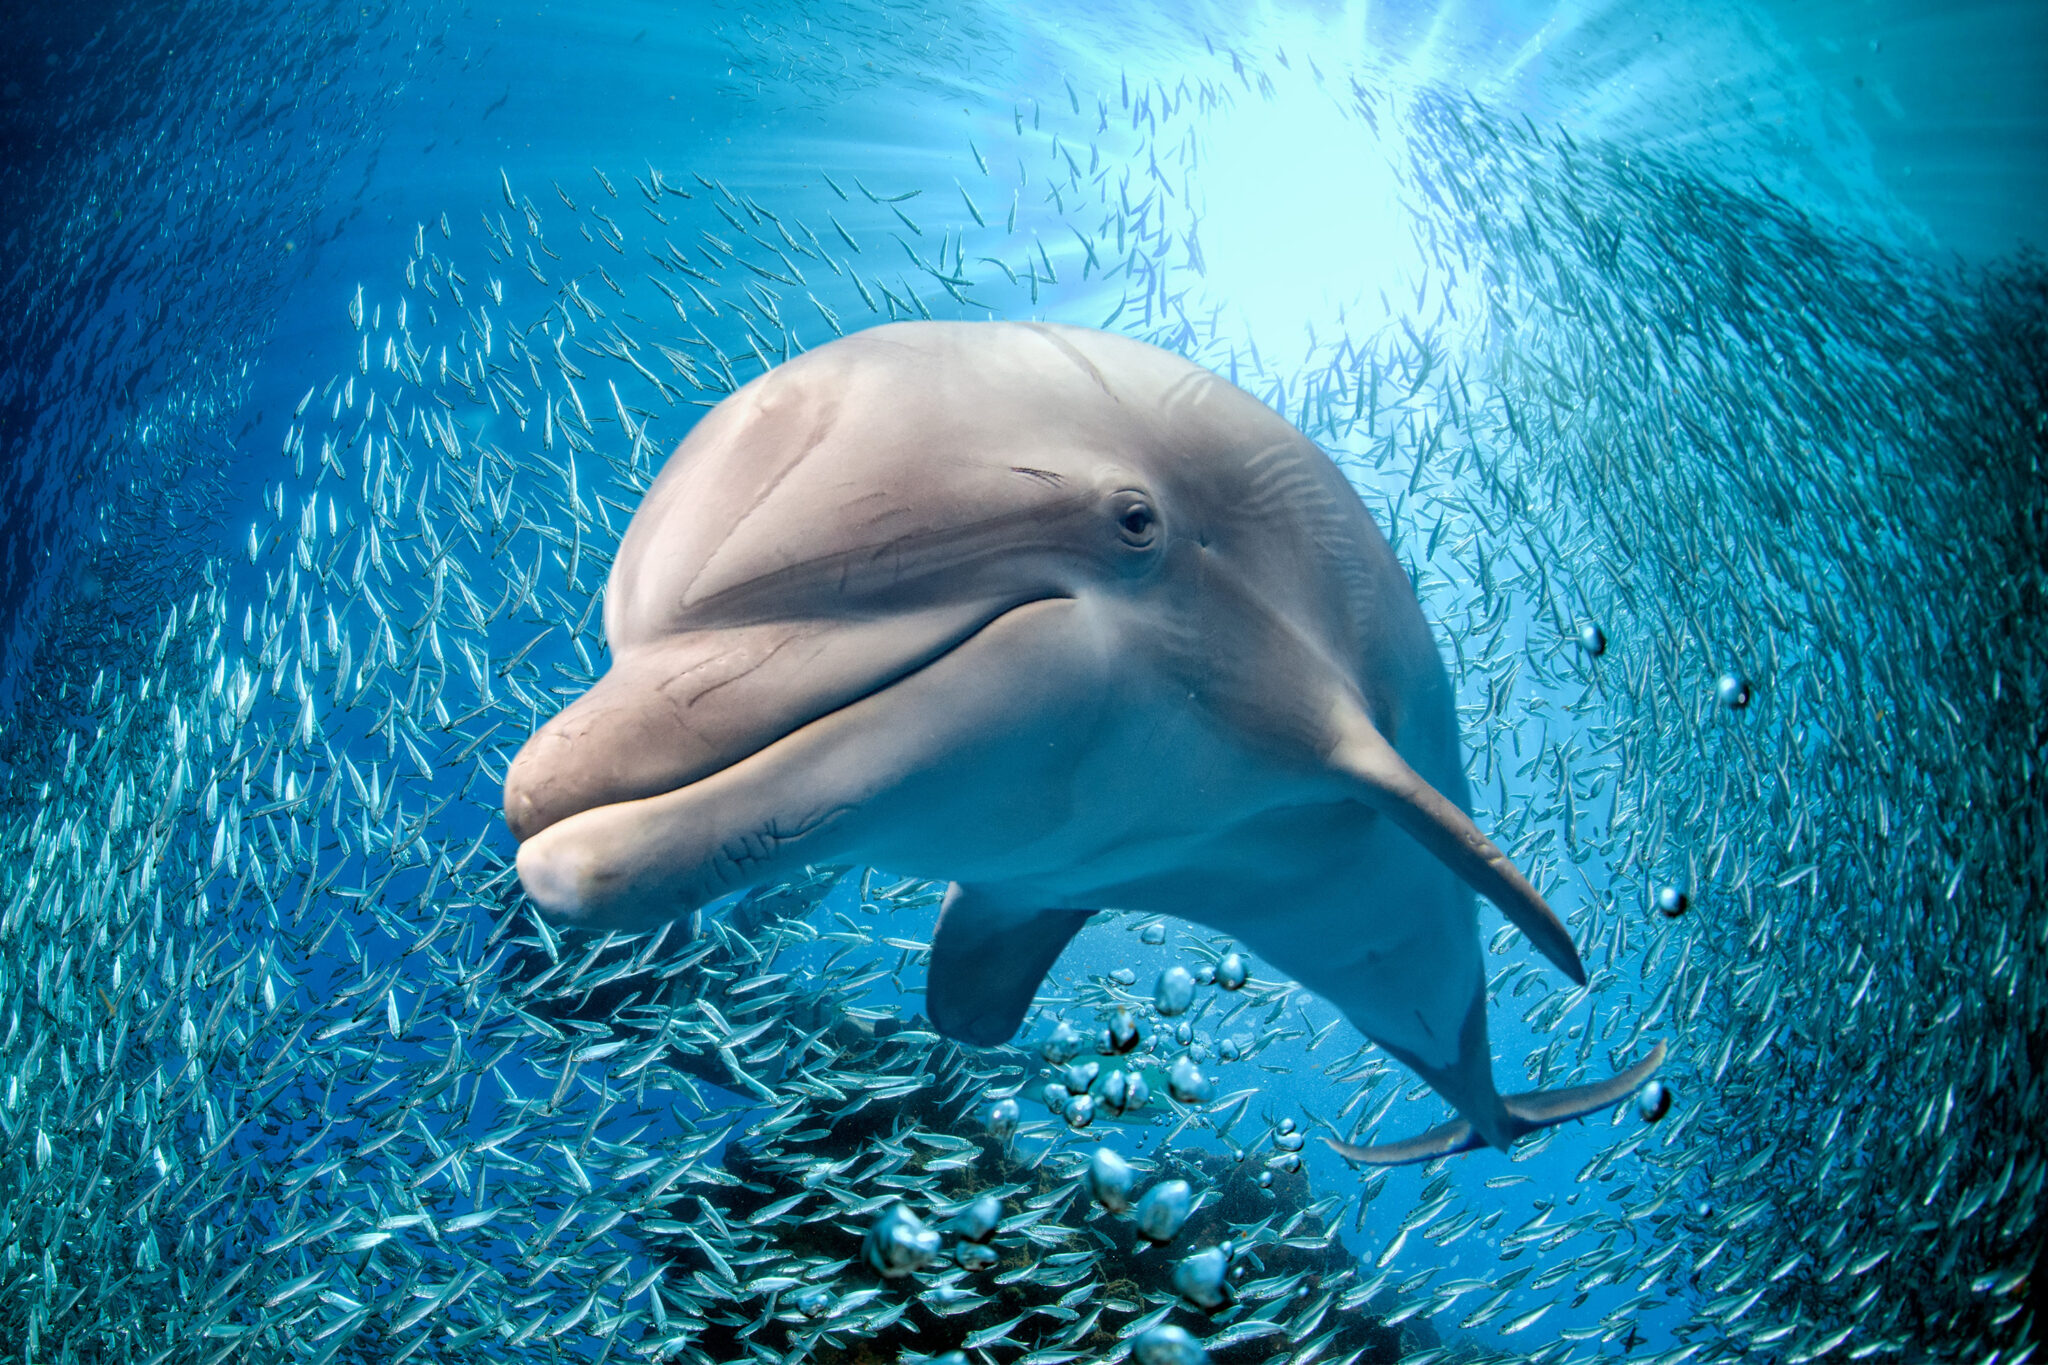 New Dolphins Underwater Ocean Sea Life Bath Beach Pool Gift Towel Dolphin Fish 